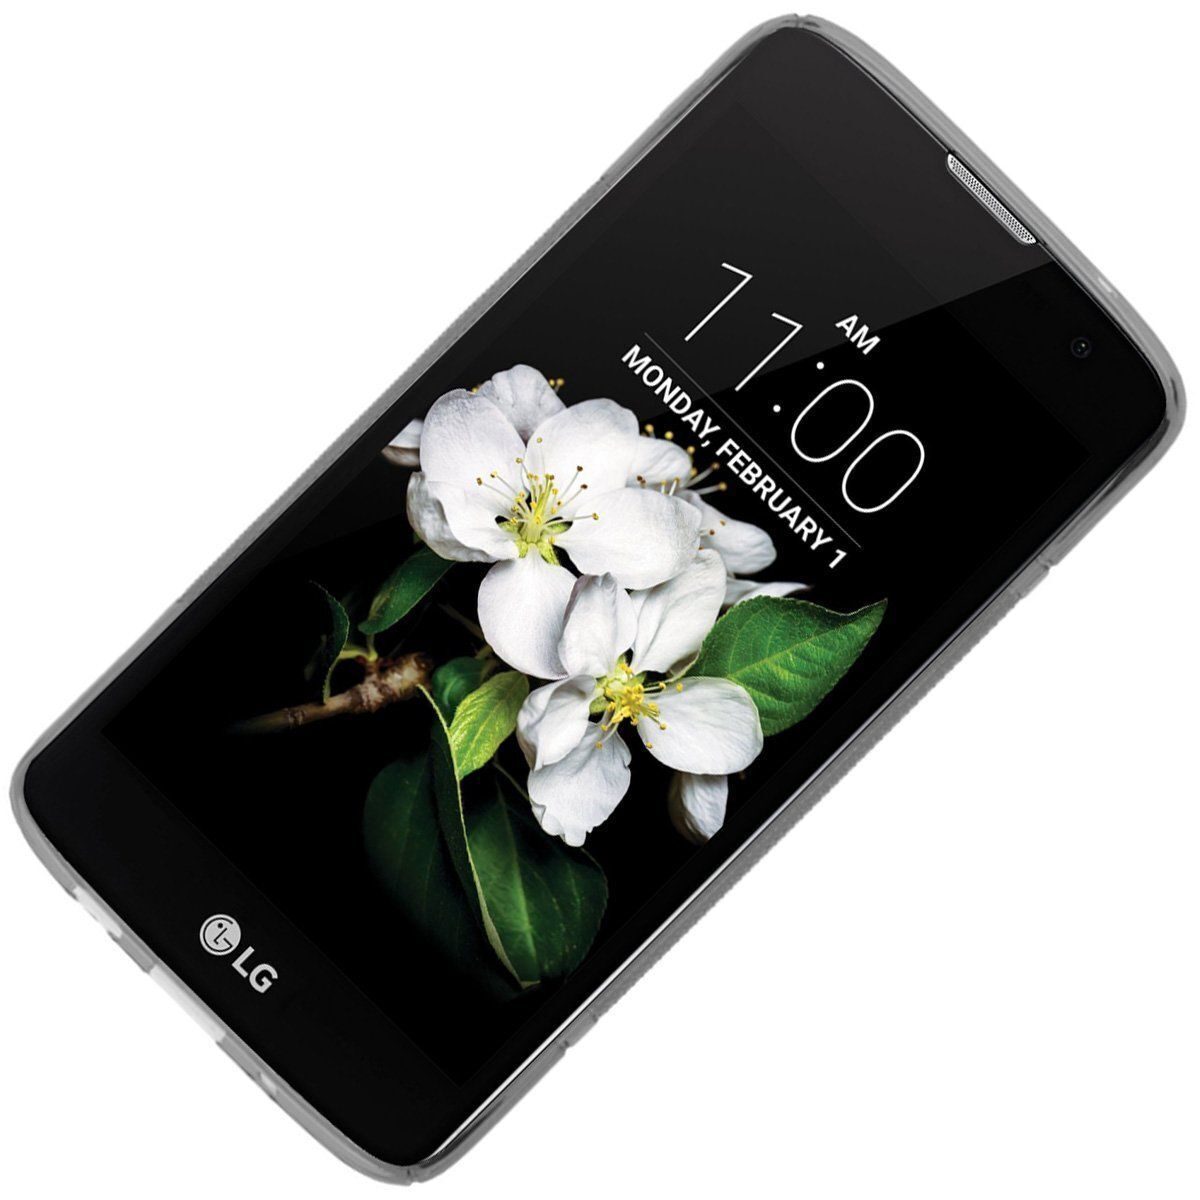 Дешевые телефоны тюмень. LG k7 2016. LG x210ds. LG k7 2015. LG K-lg1108.